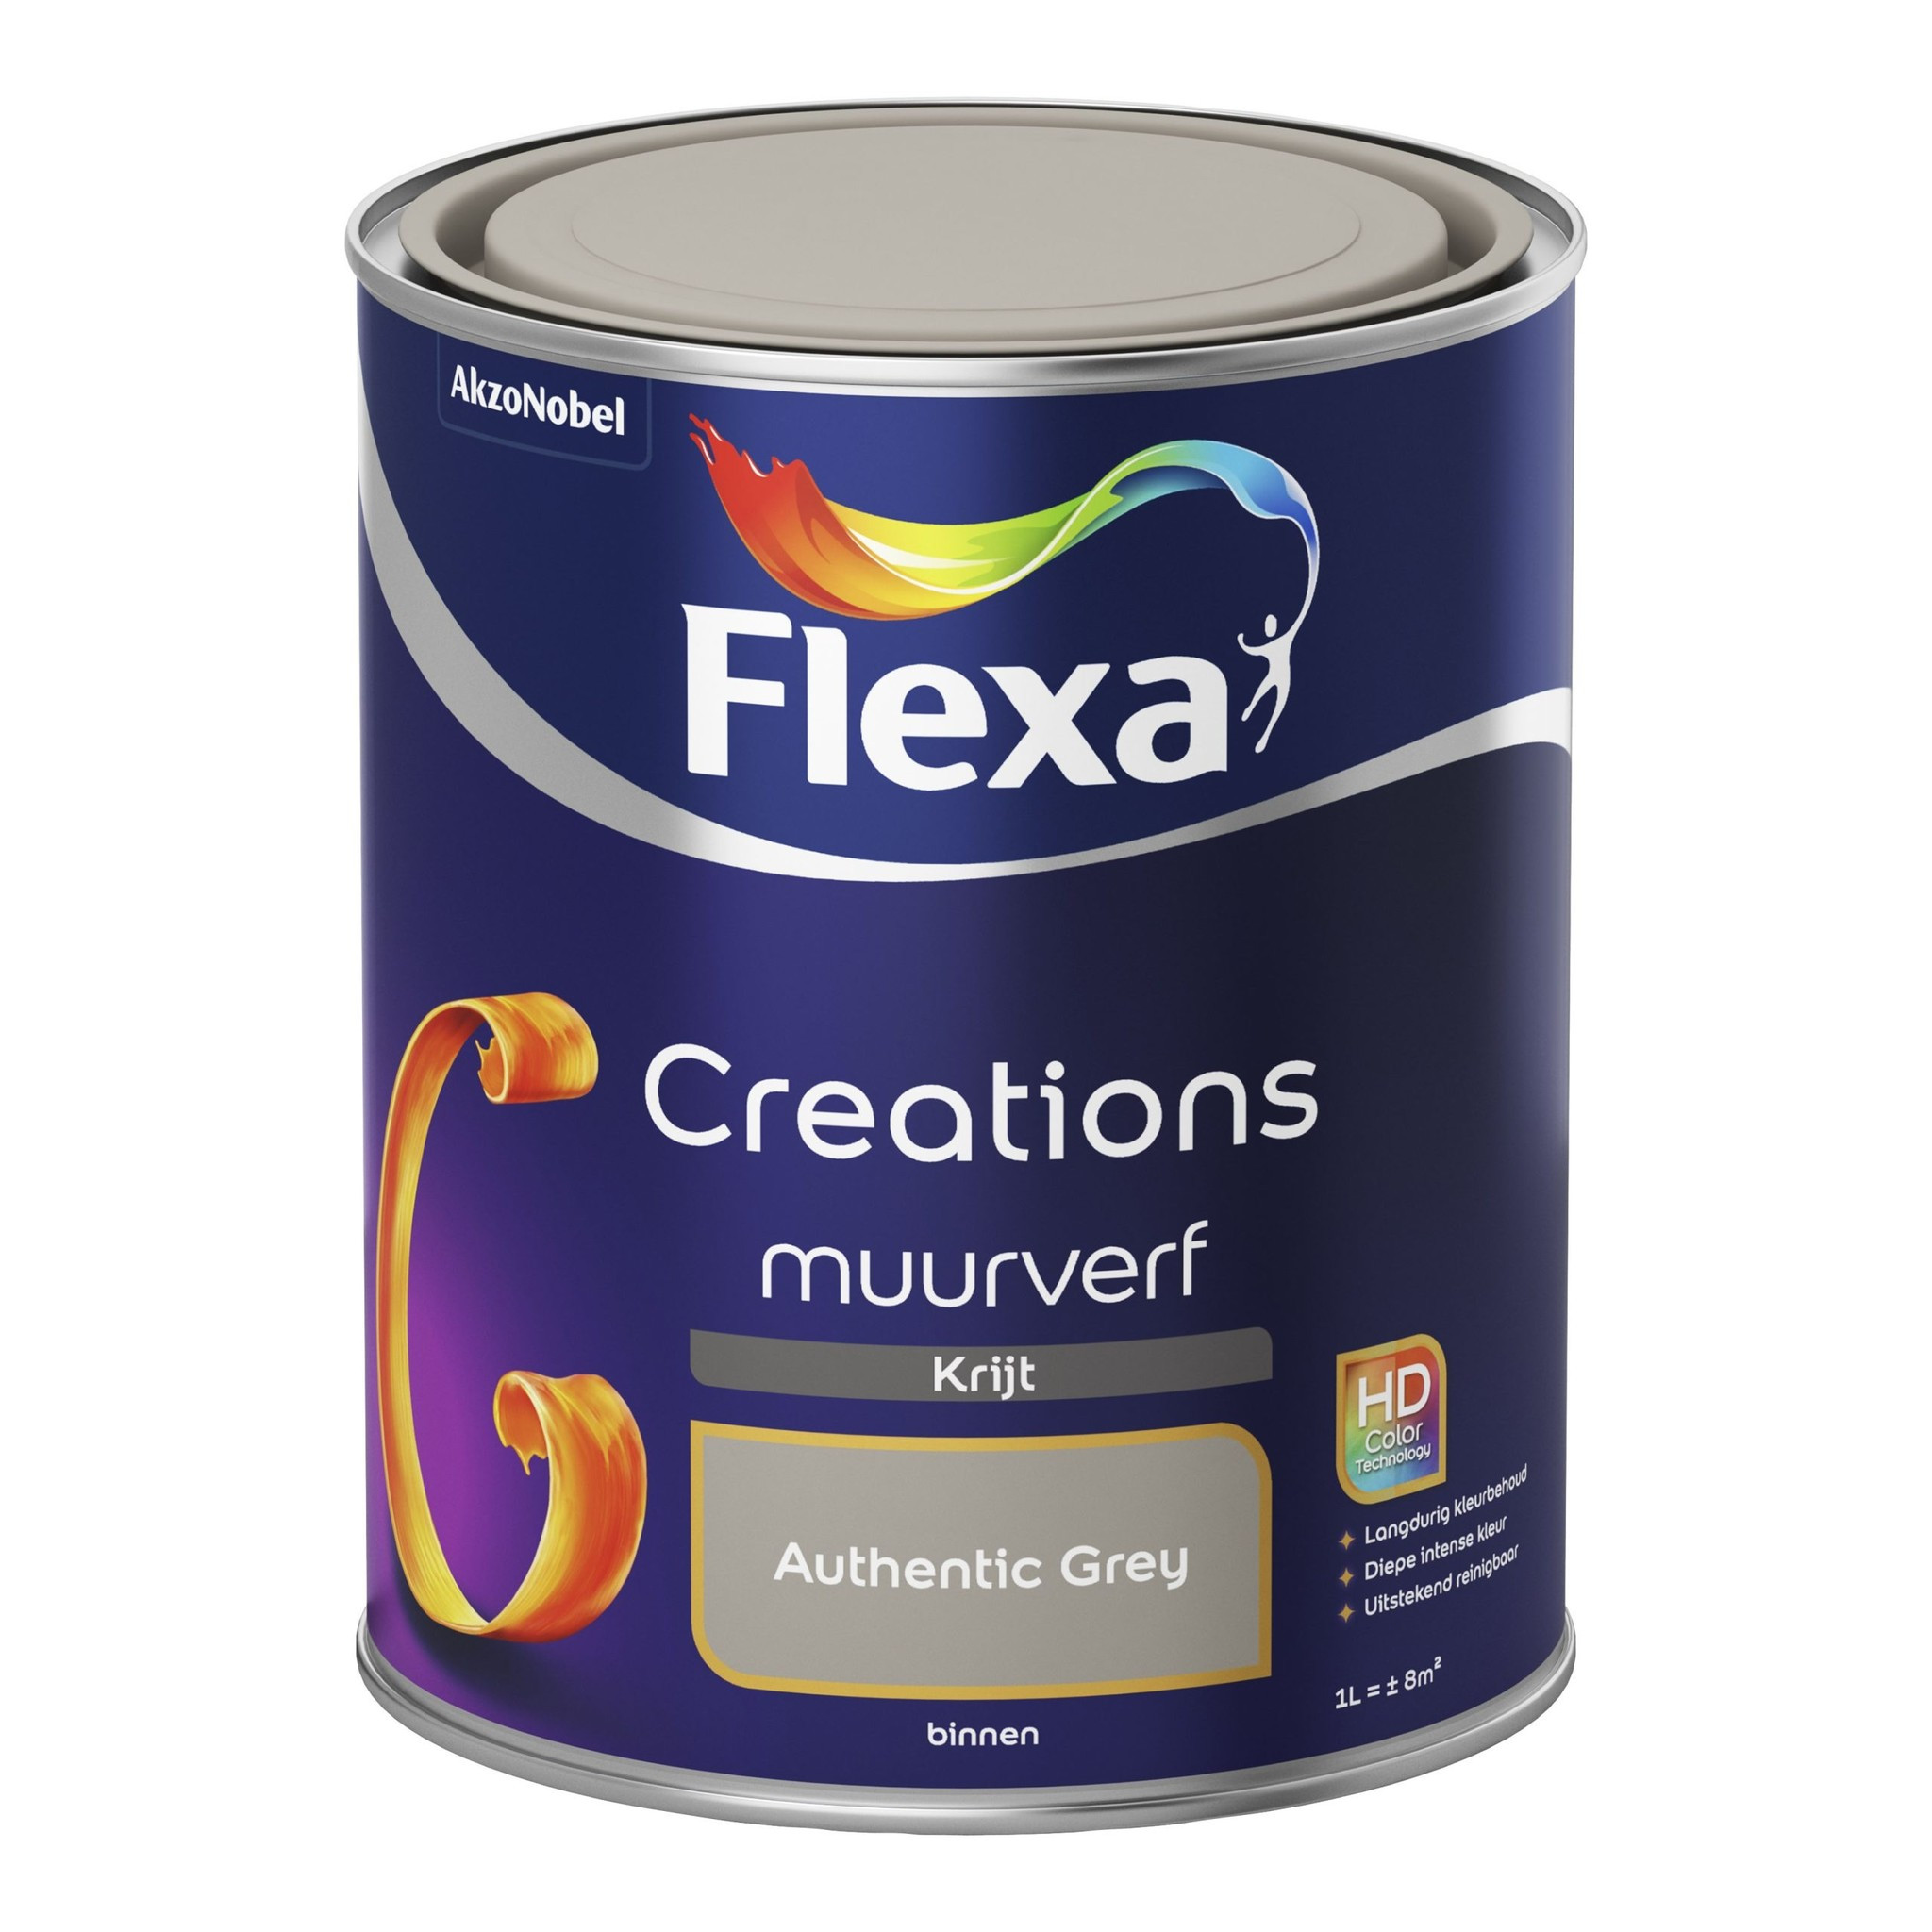 Flexa Creations Muurverf Krijt - Authentic Grey